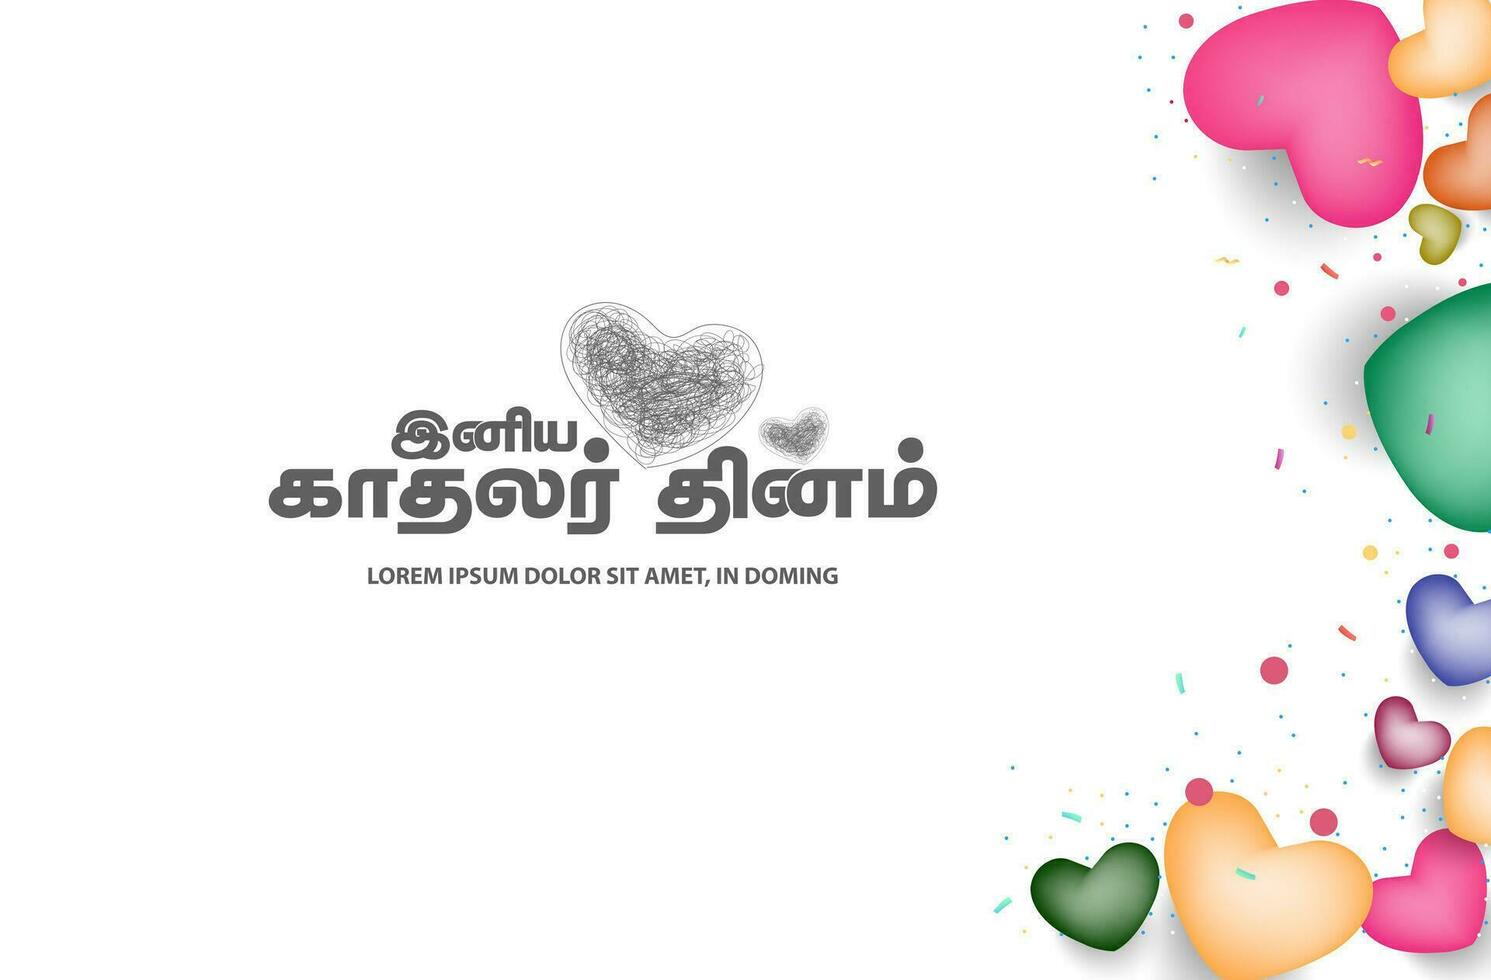 San Valentín día, romántico concepto antecedentes. traducir tamil texto con contento San Valentín día deseos, vistoso corazones y papel picado antecedentes. vector